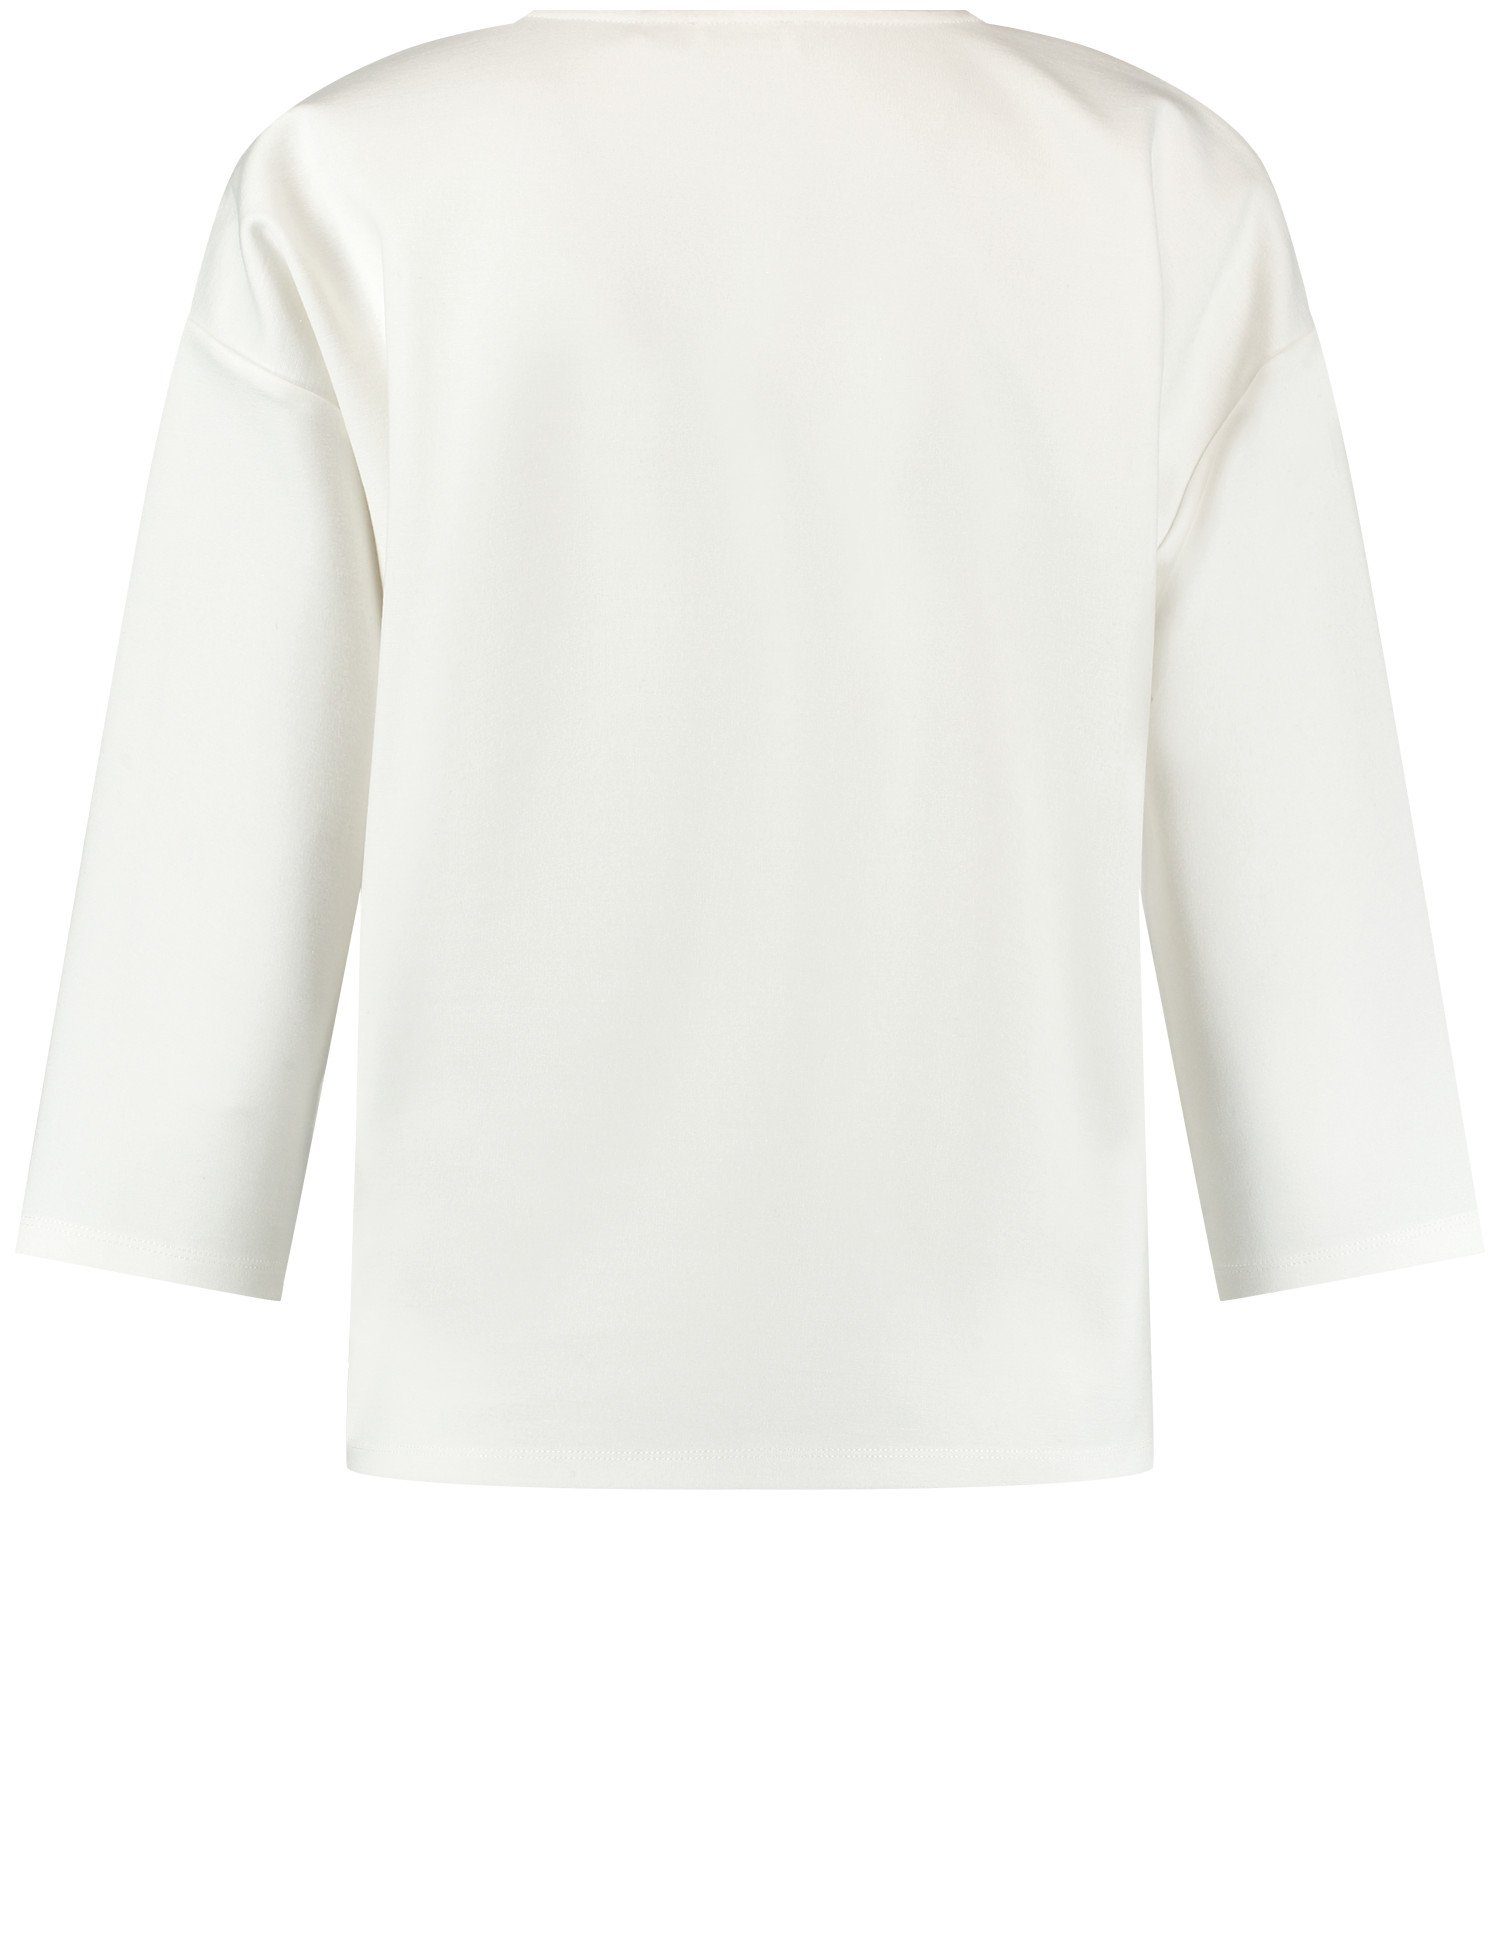 mit Perlendekor Arm Shirt Off-white GERRY WEBER 3/4-Arm-Shirt 3/4